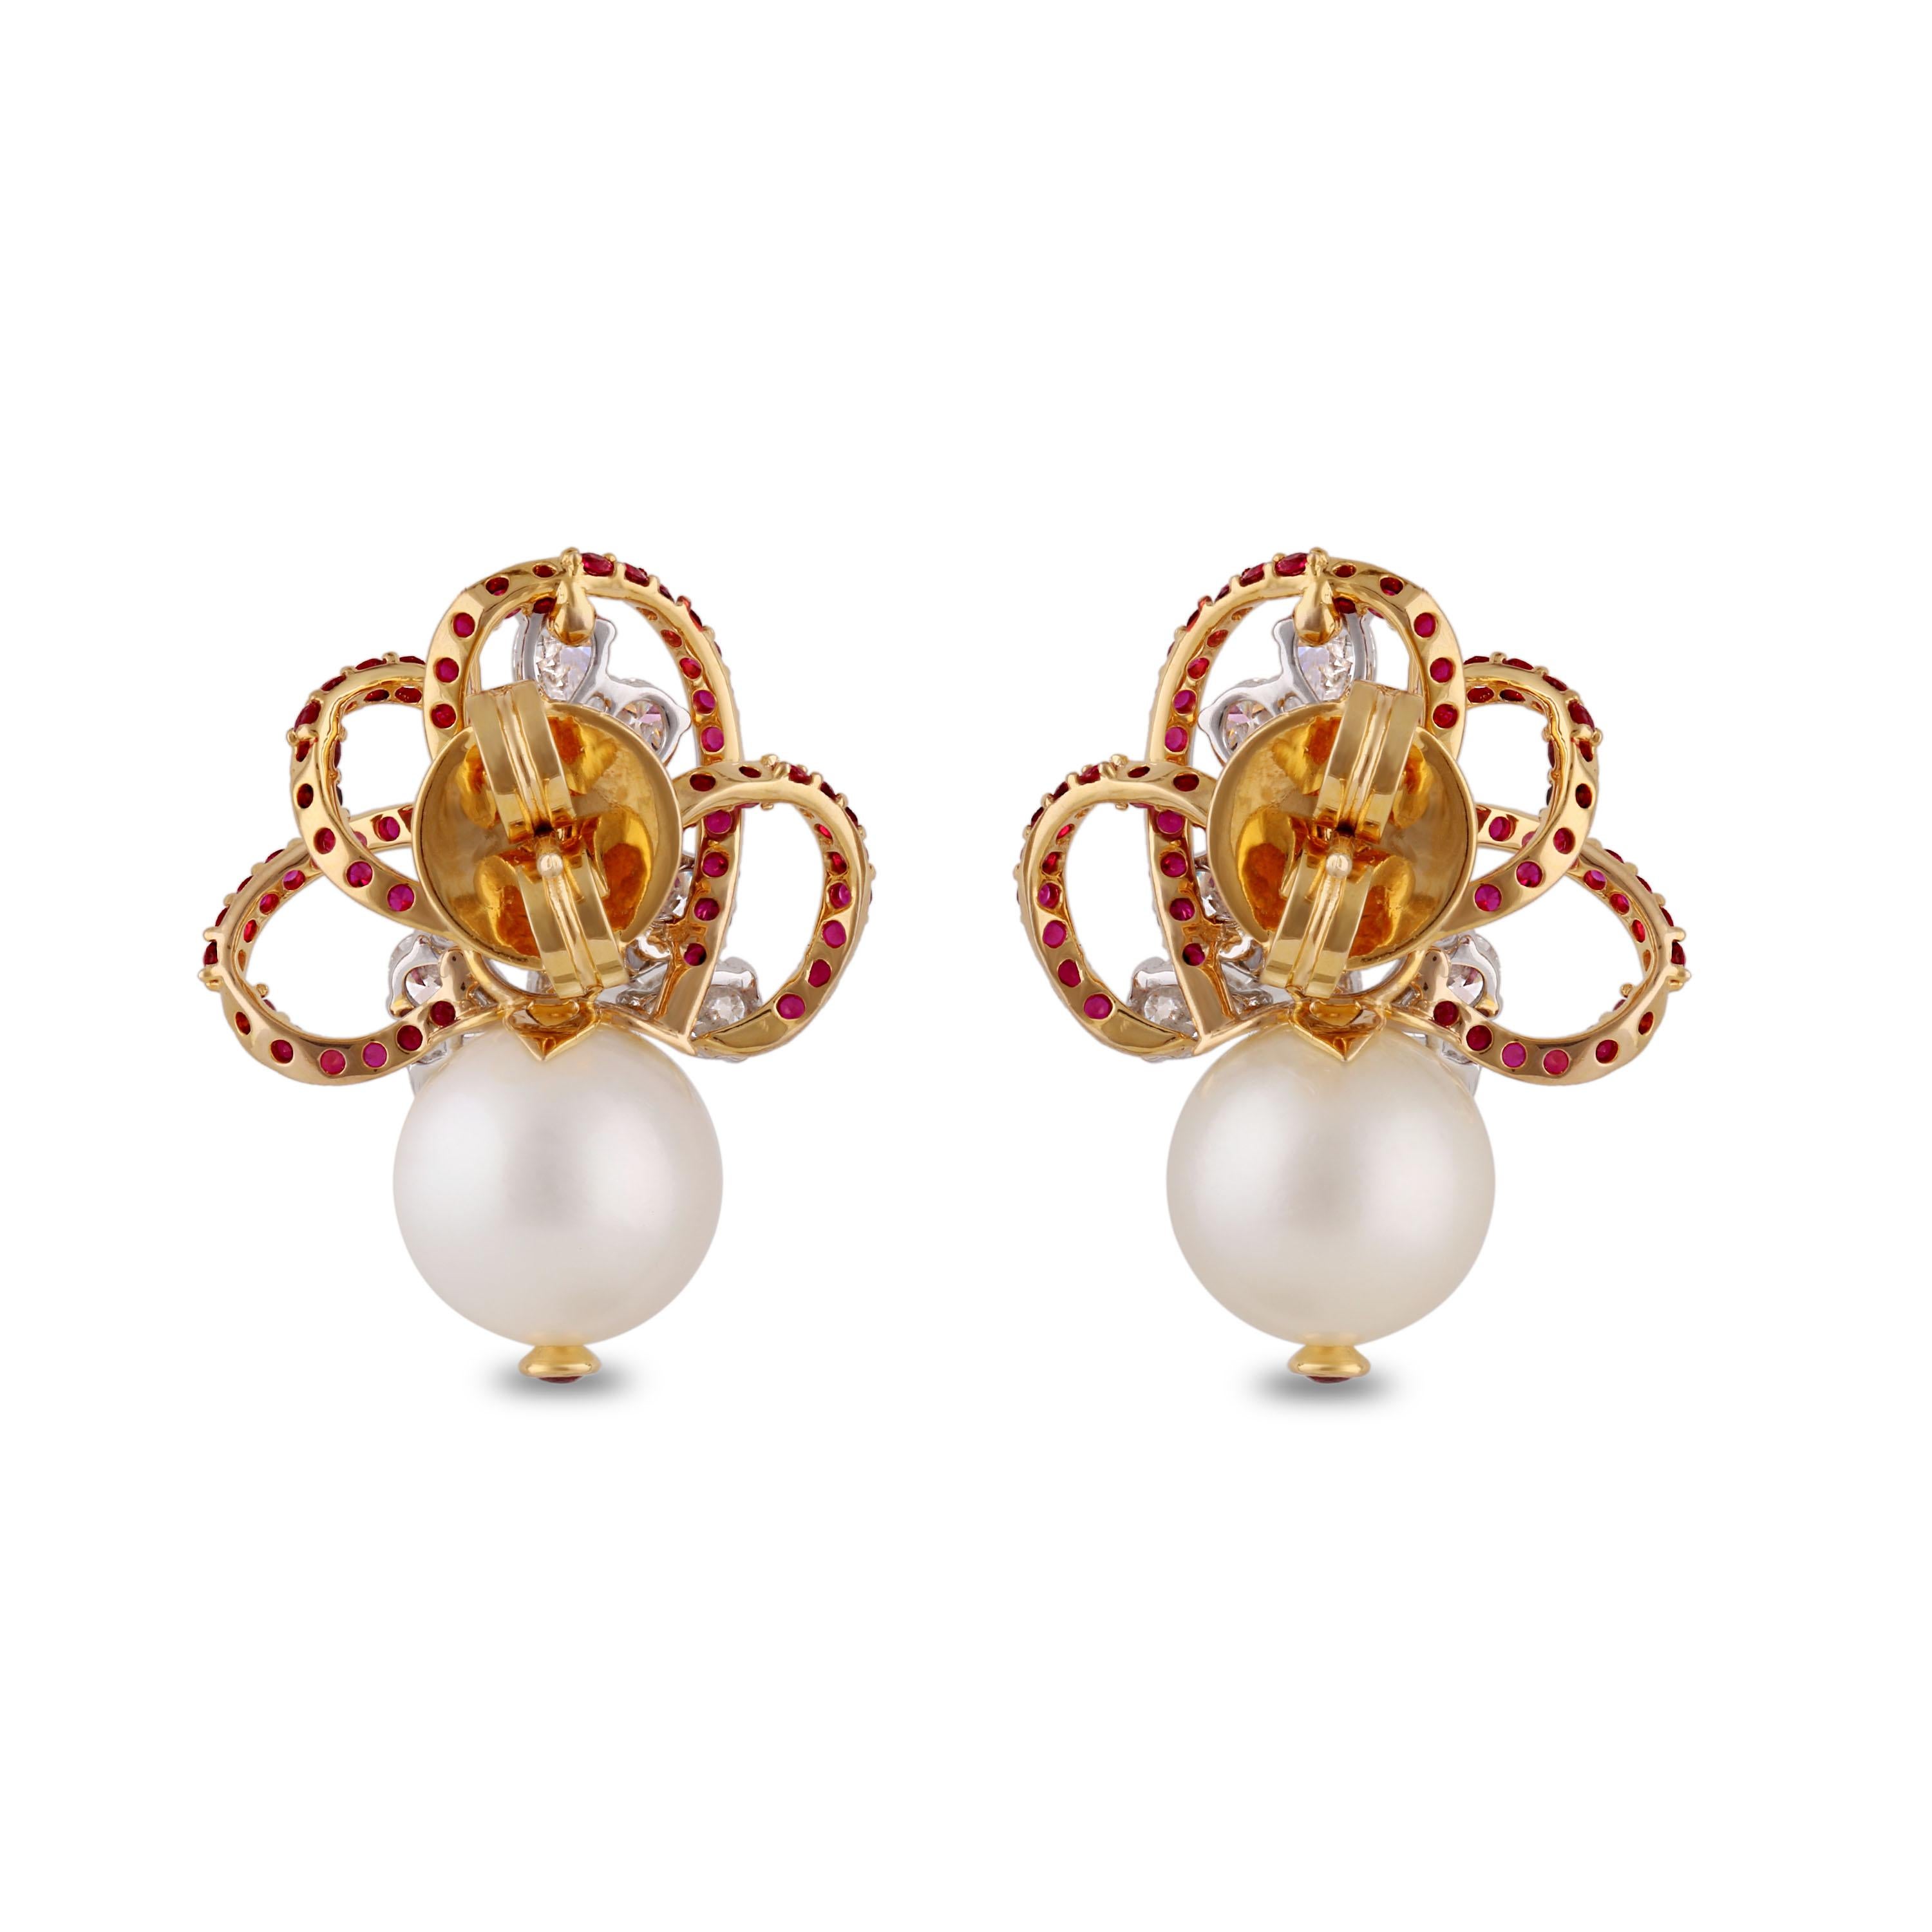 Studio Rêves Diamond and Rubies with Pearls Earrings in 18 Karat Gold For Sale 2